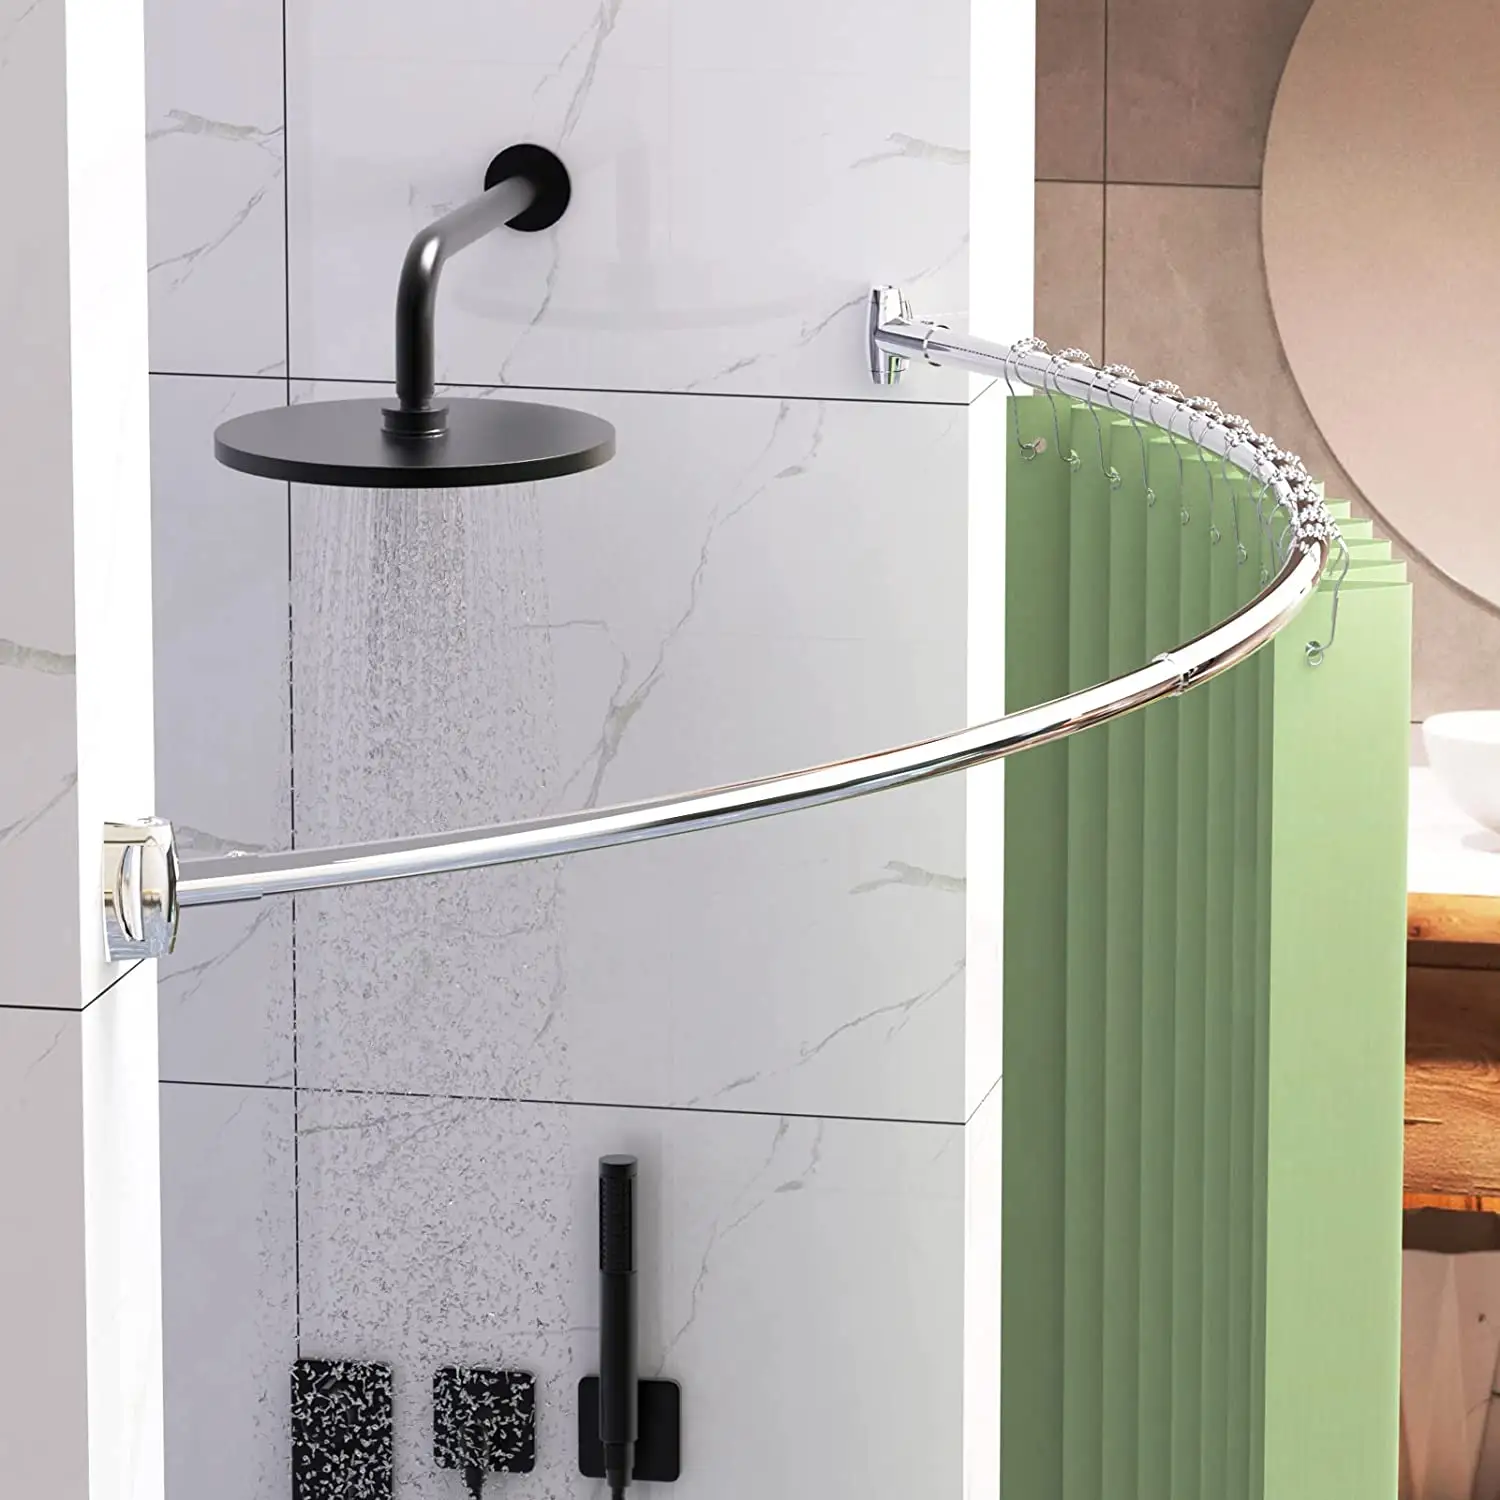 Tangkai gorden mandi 43-72 inci kustom, tongkat Pancuran untuk kamar mandi baja tahan karat yang dapat disesuaikan